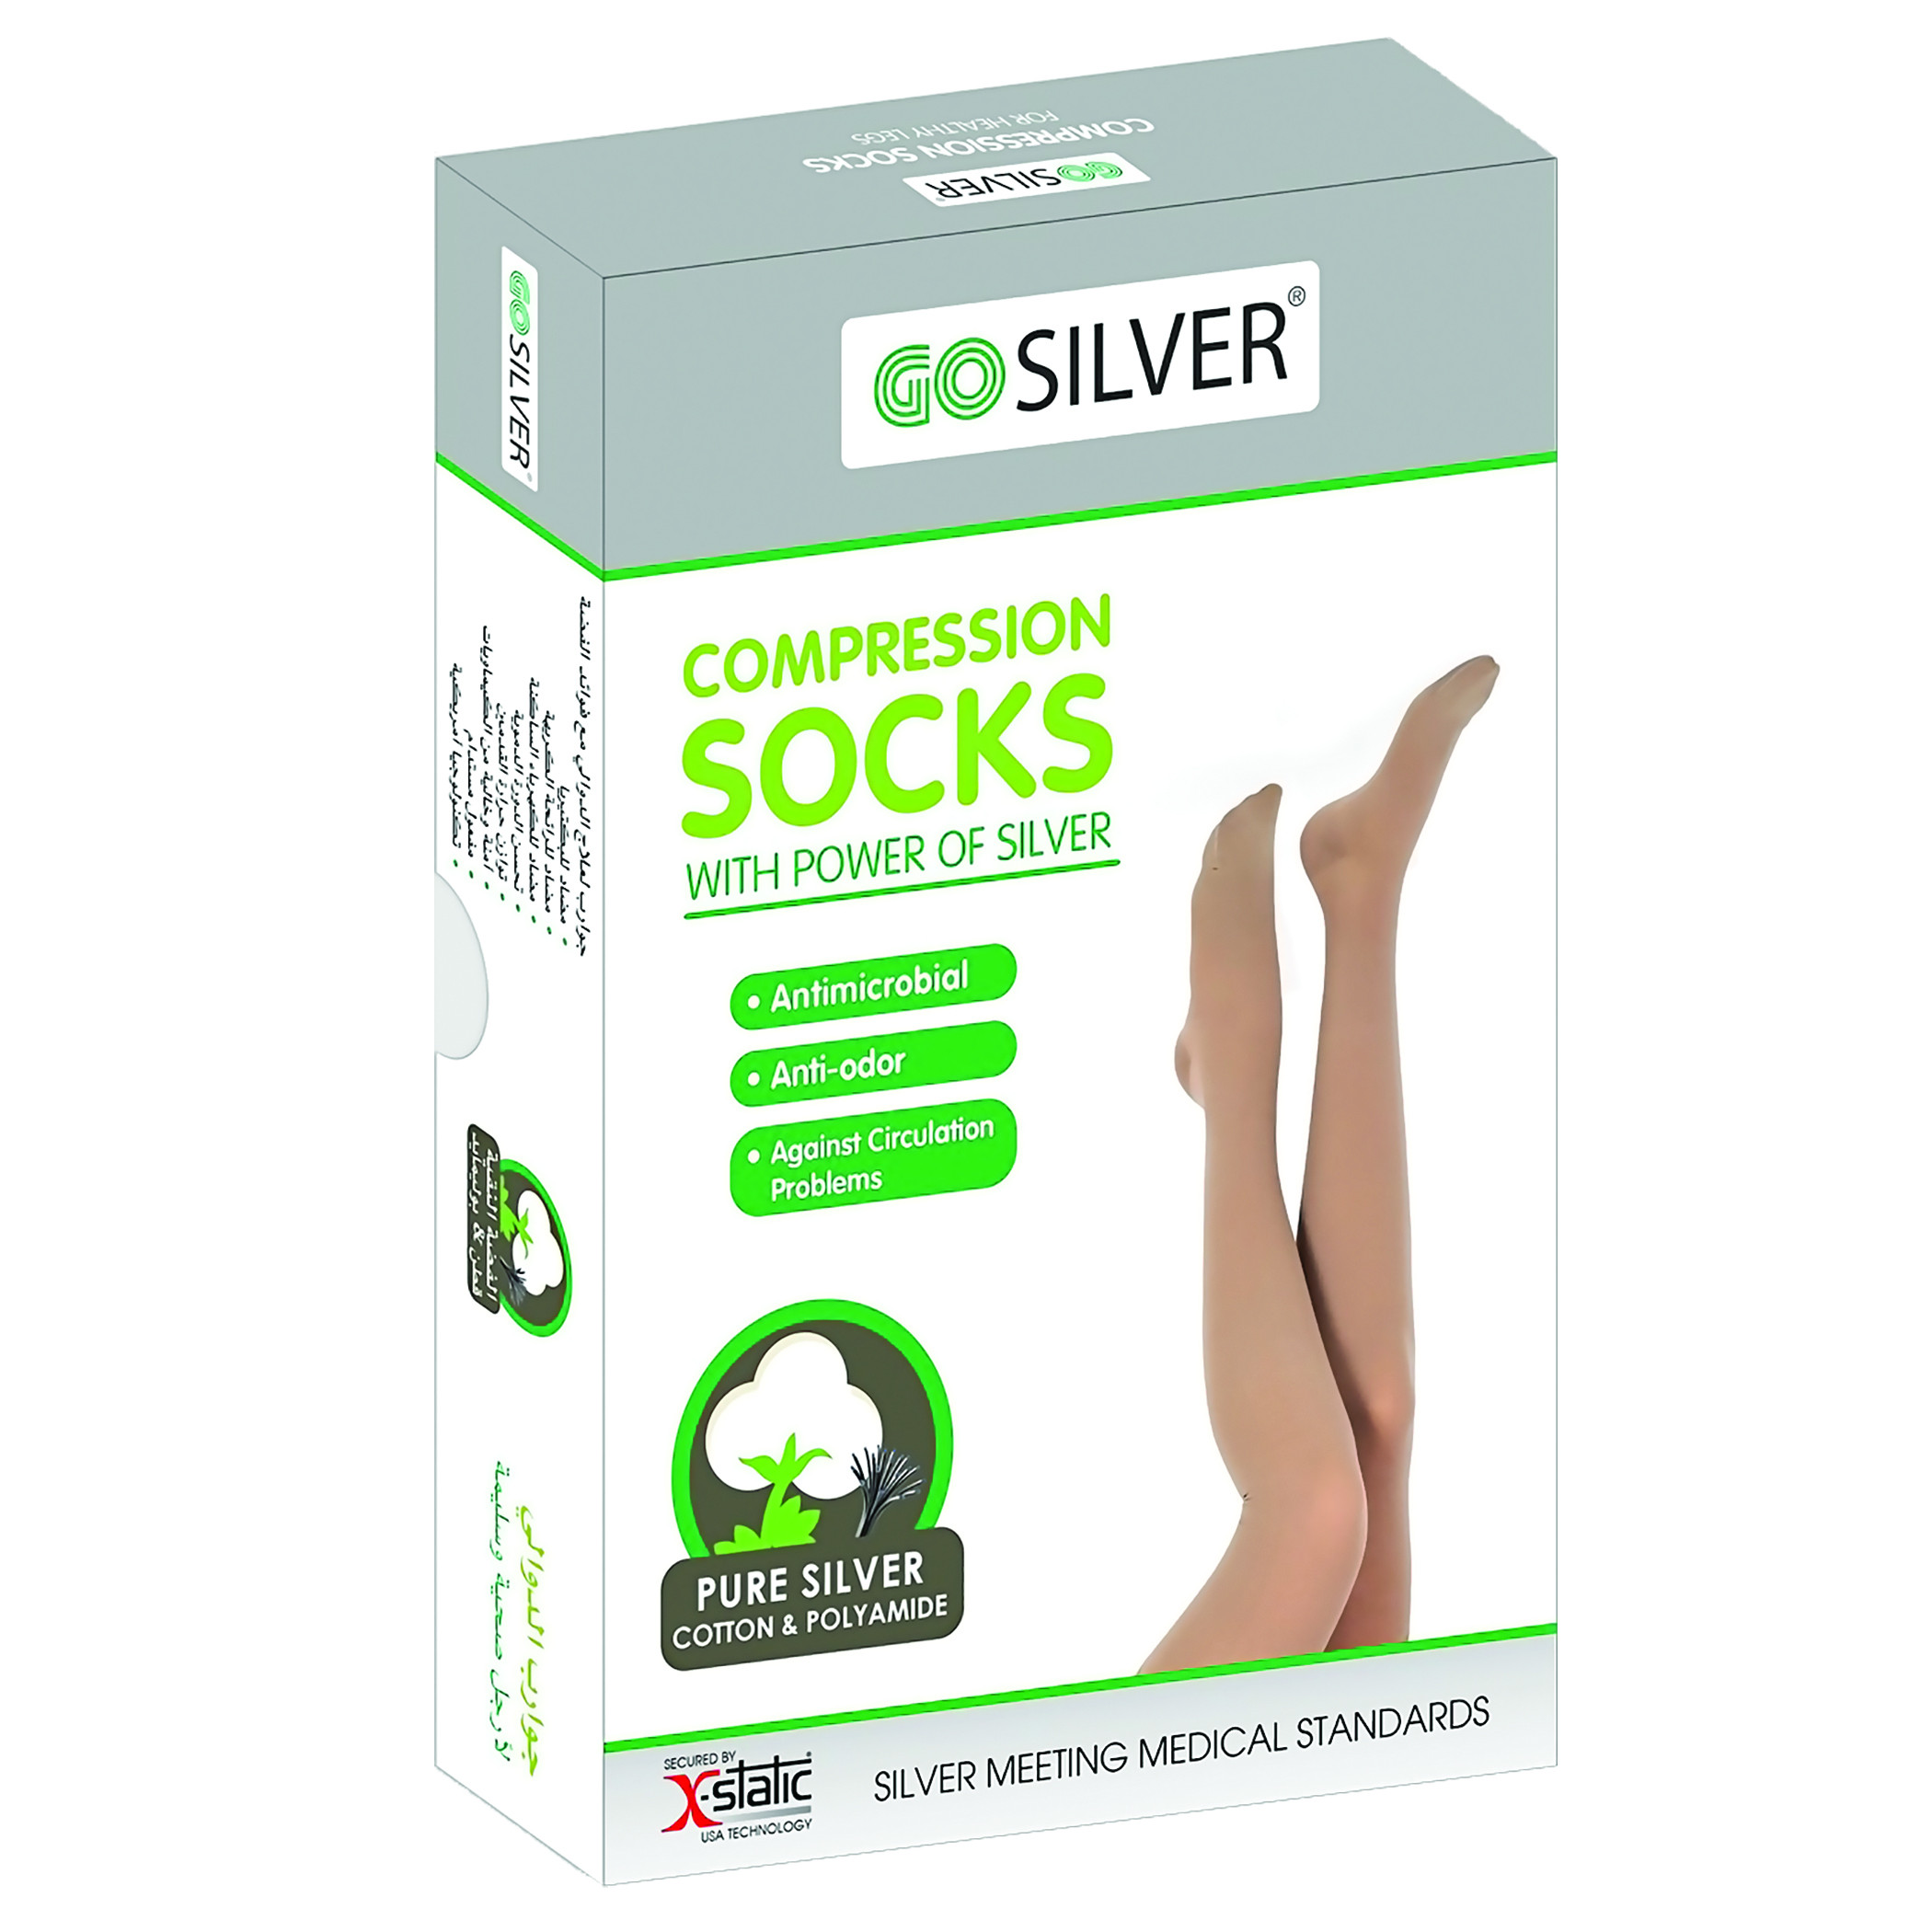 Go Silver Knee High, Compression Socks, Class 3 (34-46 mmHg) Open Toe Flesh Size 4